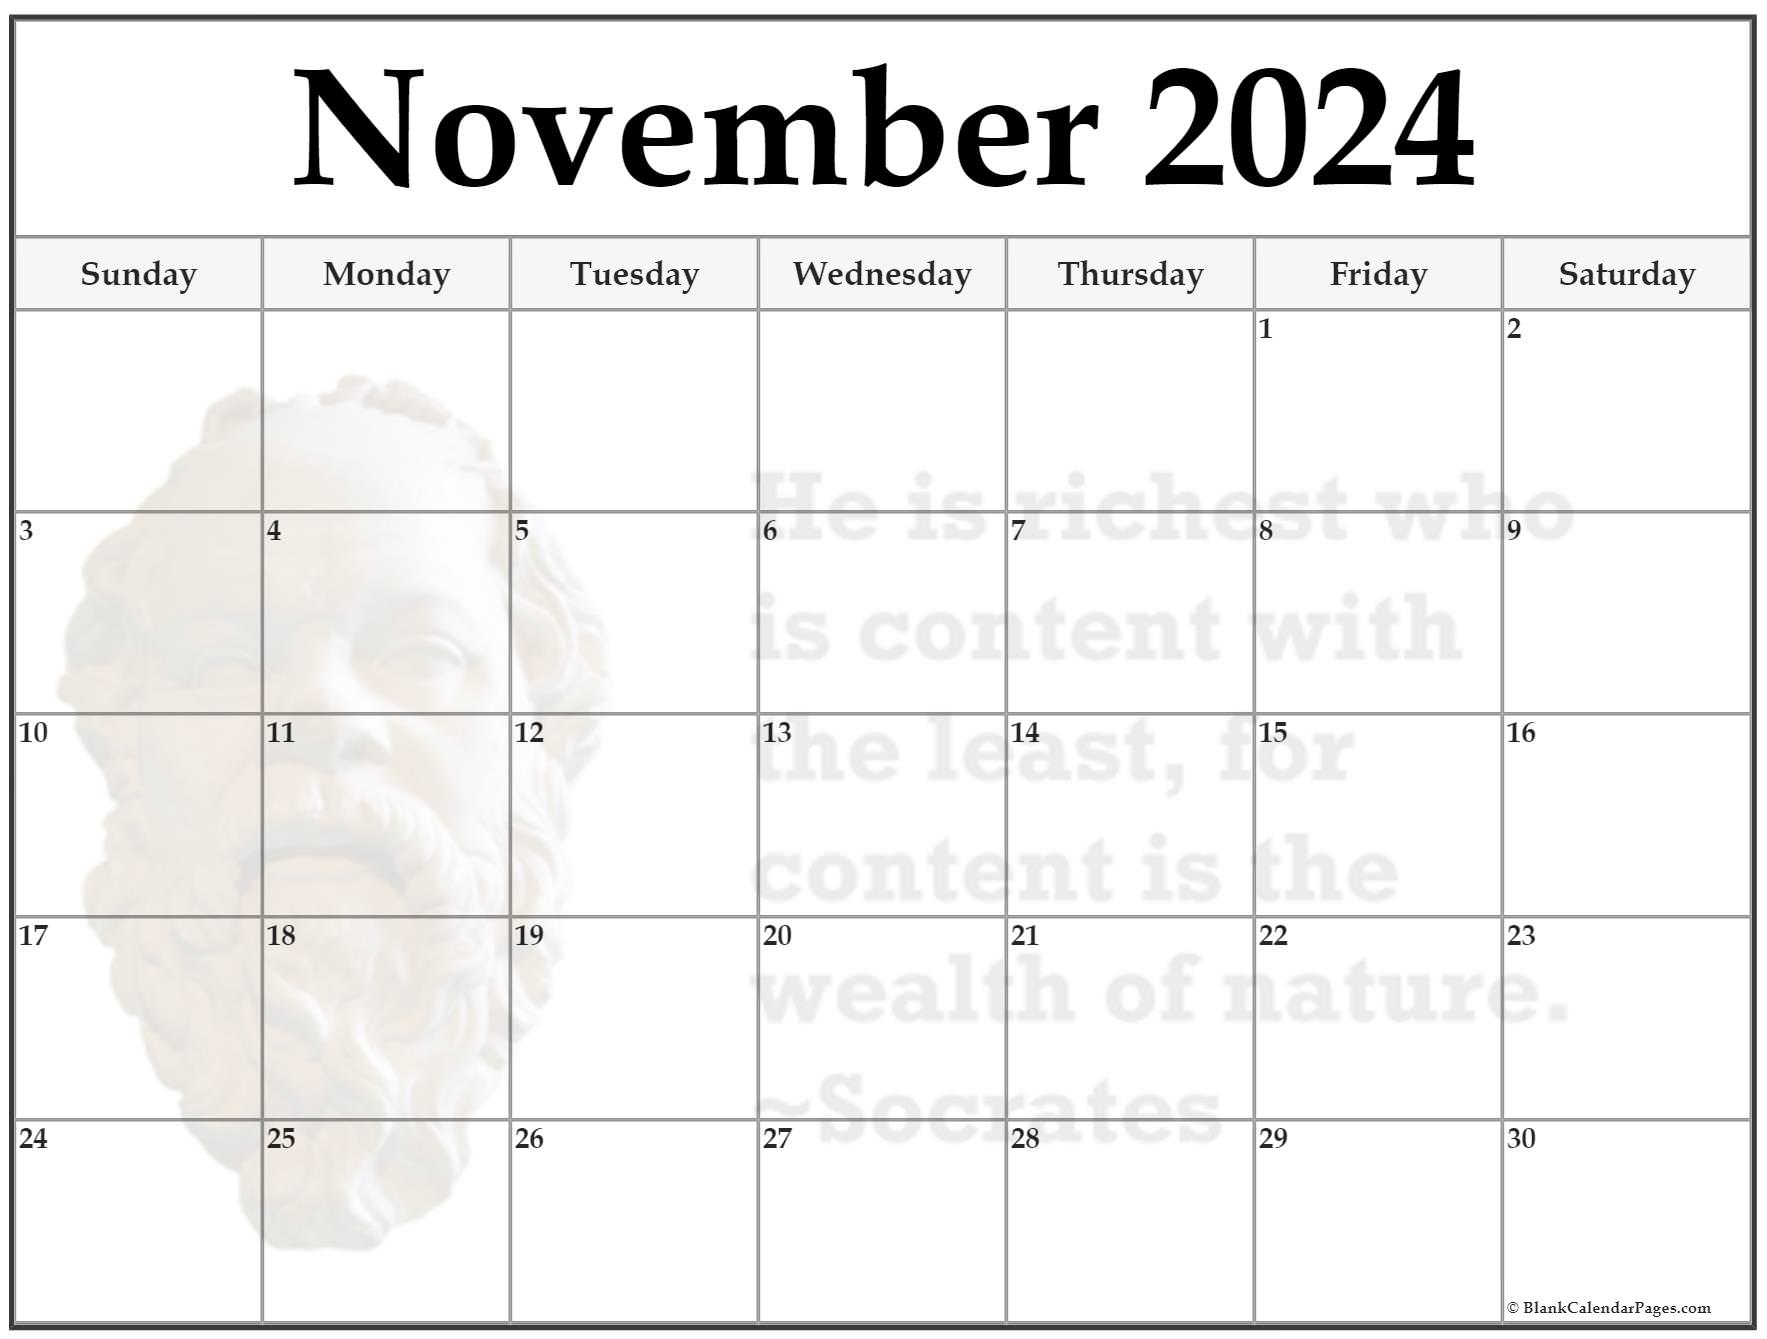 24 November 2022 Quote Calendars